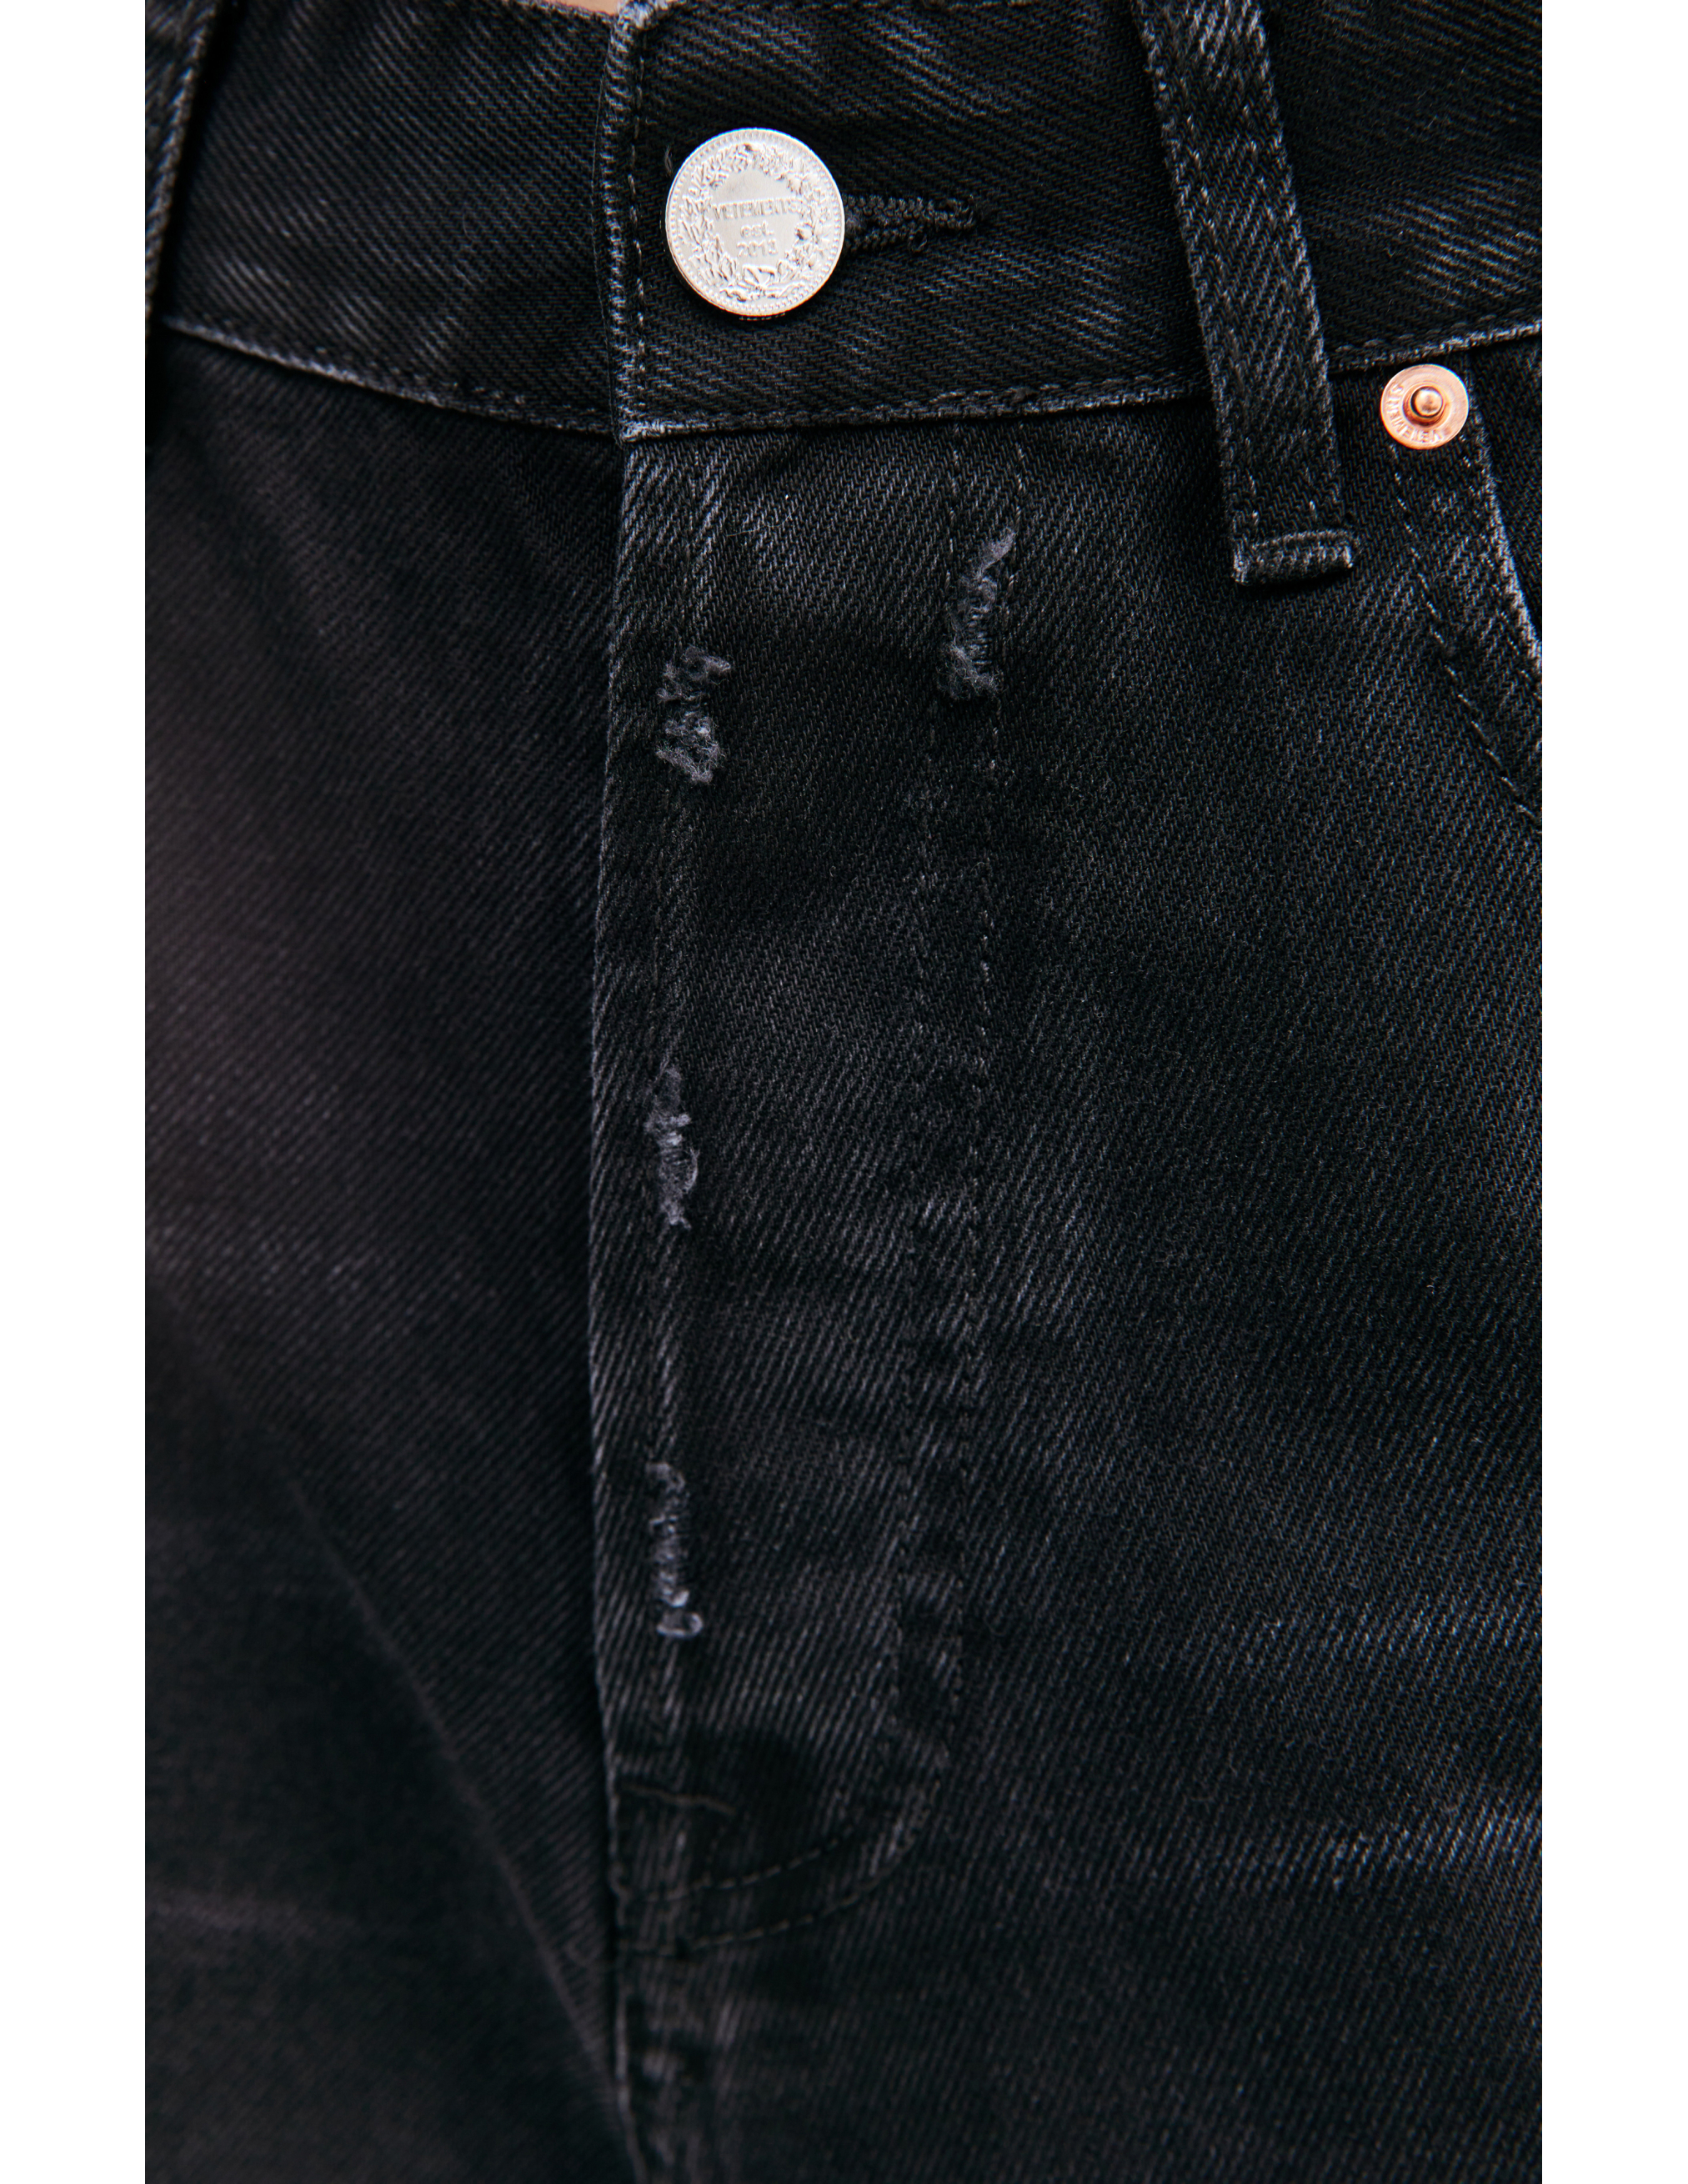 Черные широкие джинсы VETEMENTS UE64PA140B/2802, размер 26;27;28;32;34 UE64PA140B/2802 - фото 4